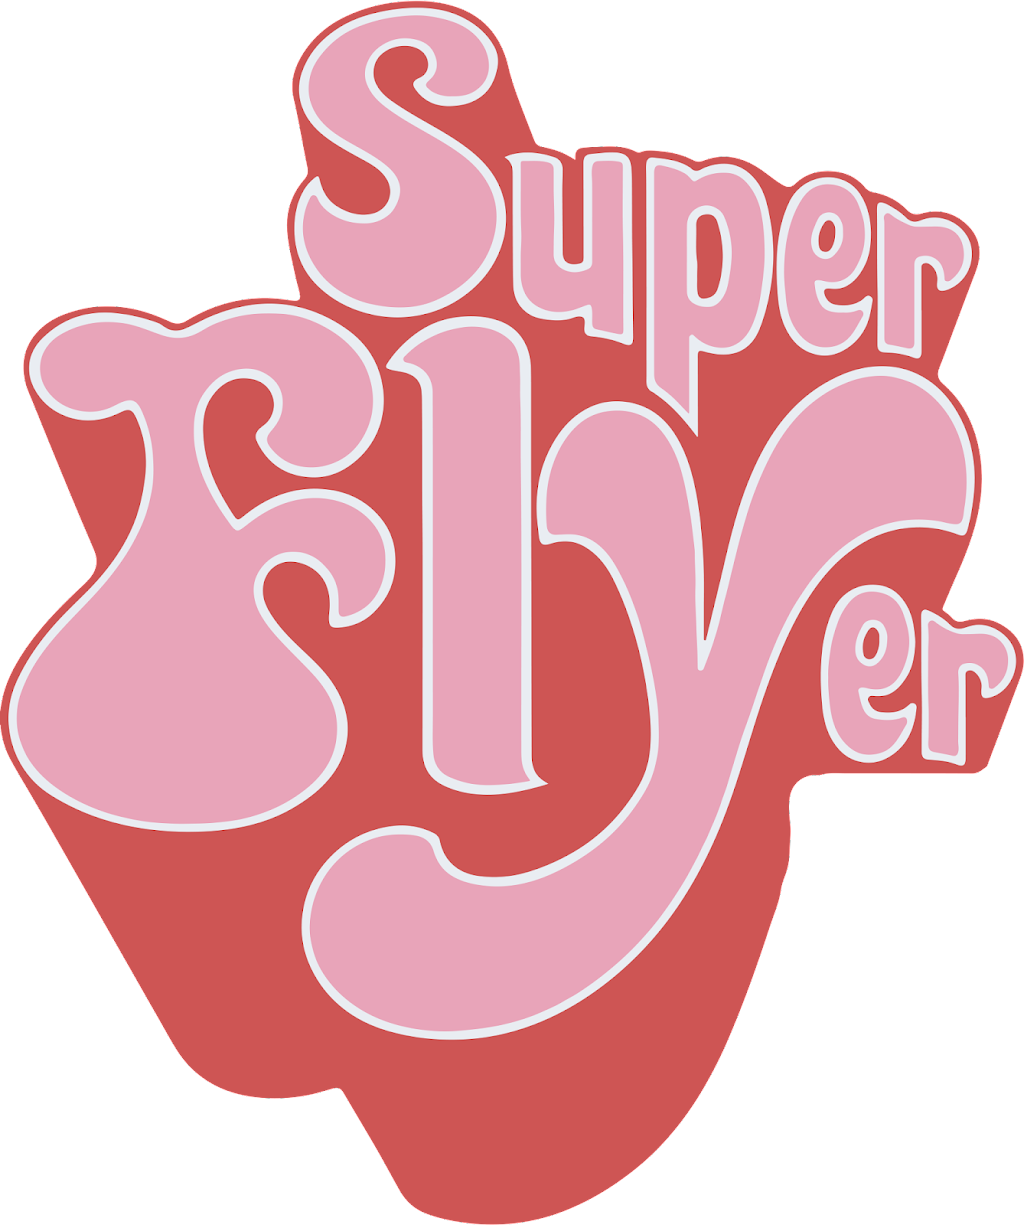 SuperFlyer | 23 Echuca Rd, Empire Bay NSW 2257, Australia | Phone: 0401 515 404